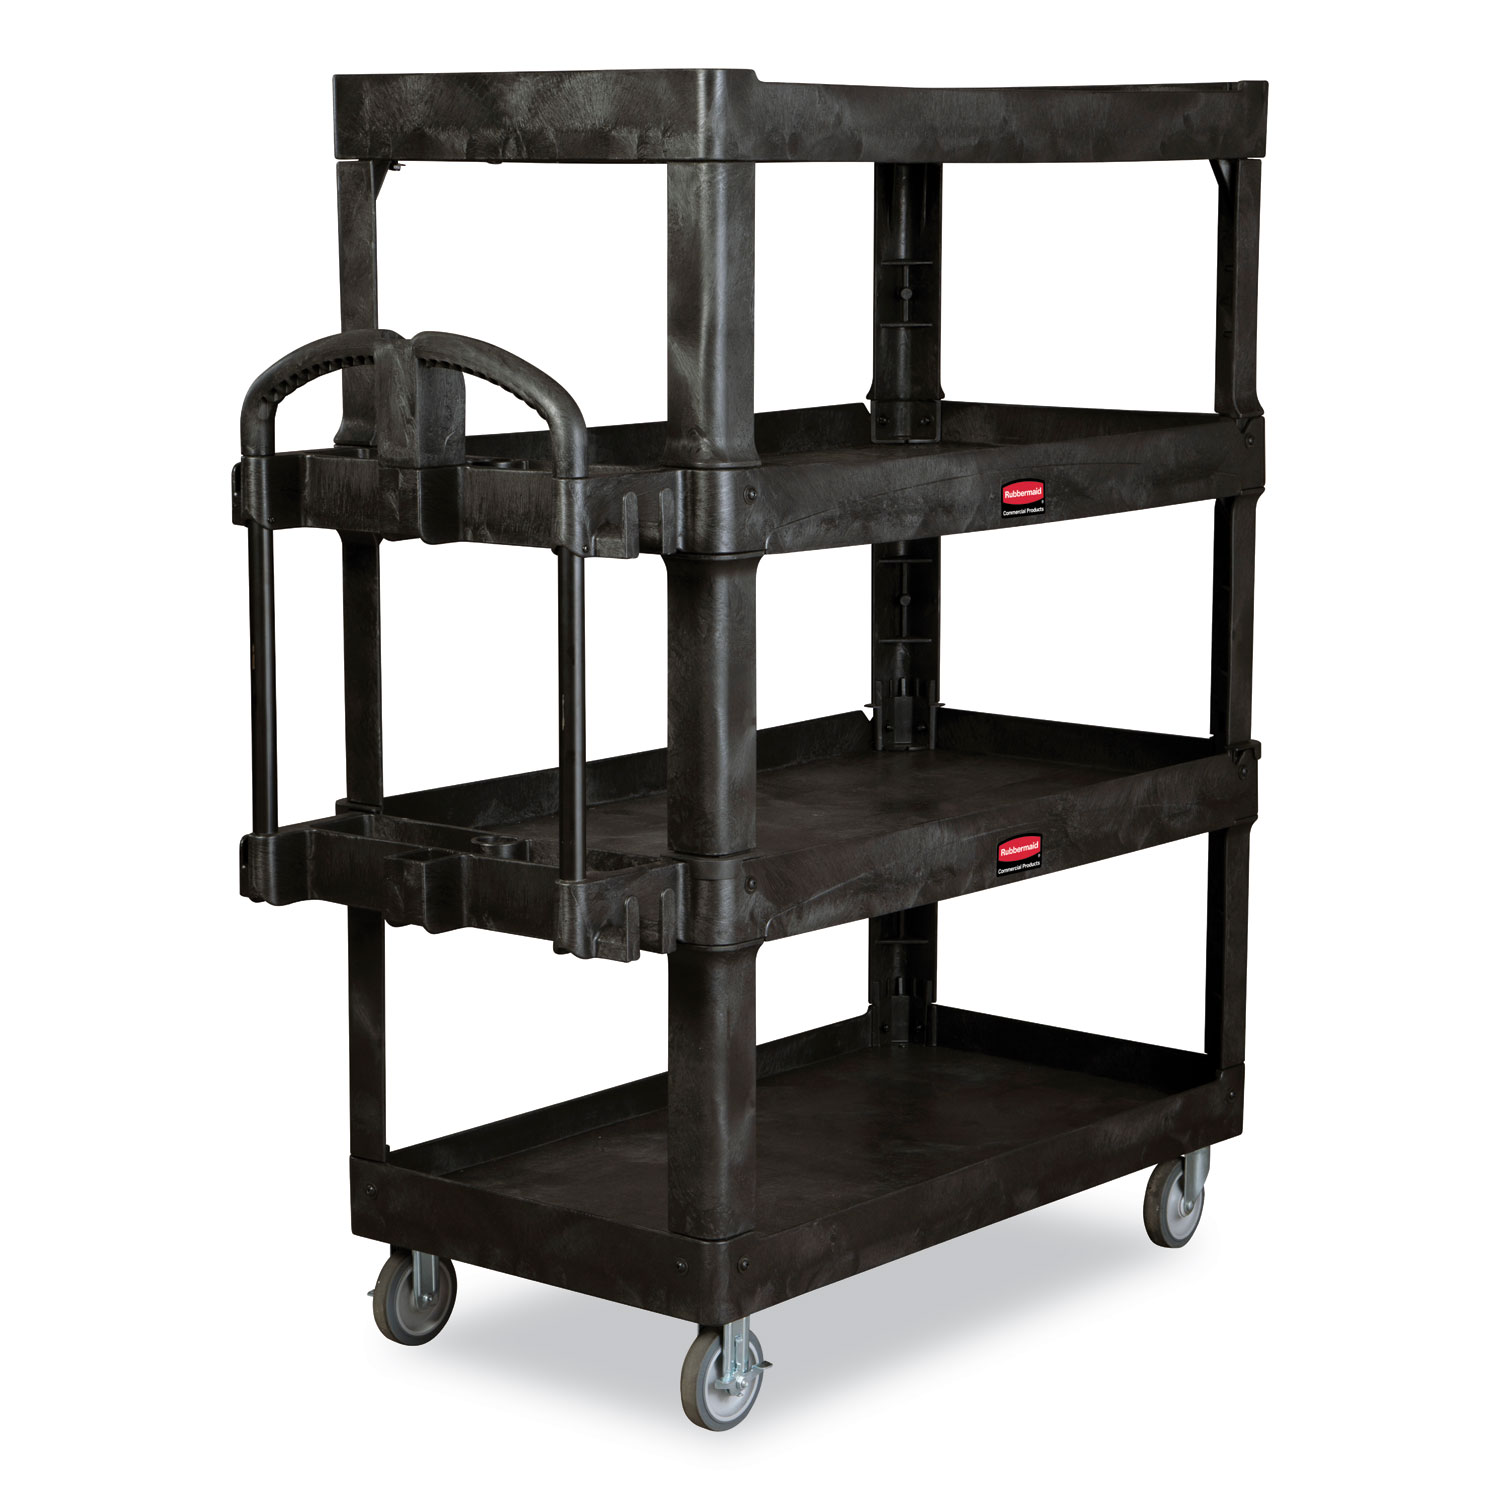  Rubbermaid Commercial 2128657 4-Shelf Heavy-Duty Ergo Utility Cart, 700 lb Capacity, 24.35 x 54.1 x 62.4, Black (RCP2128657) 